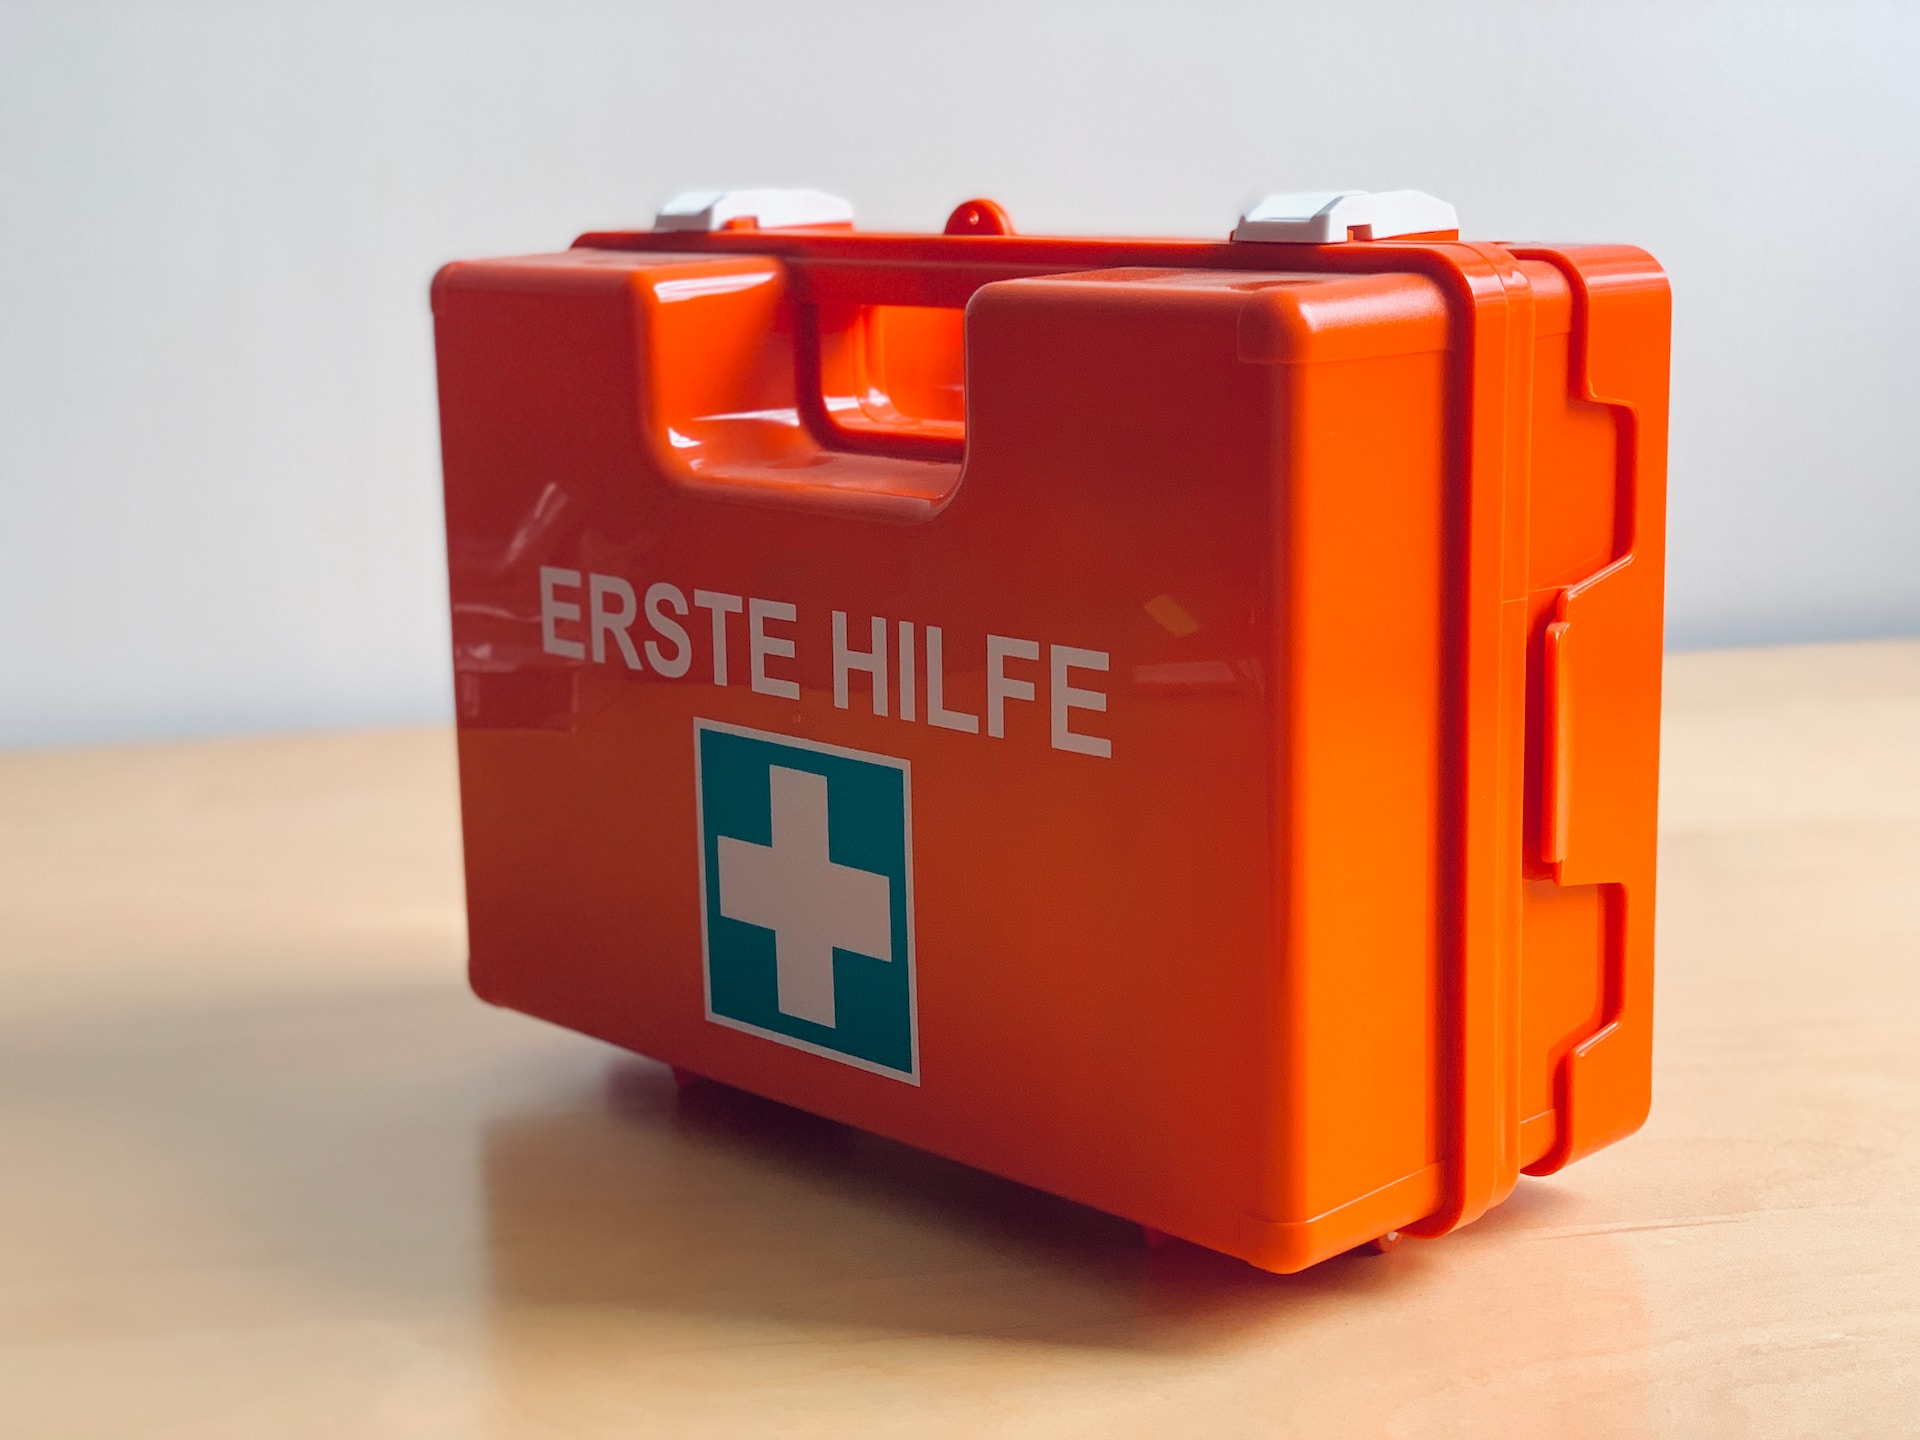 Rettungssanitäter Erste Hilfe Kurse in Berlin mit lebensrettenden Maßnahmen in Notfallsituationen